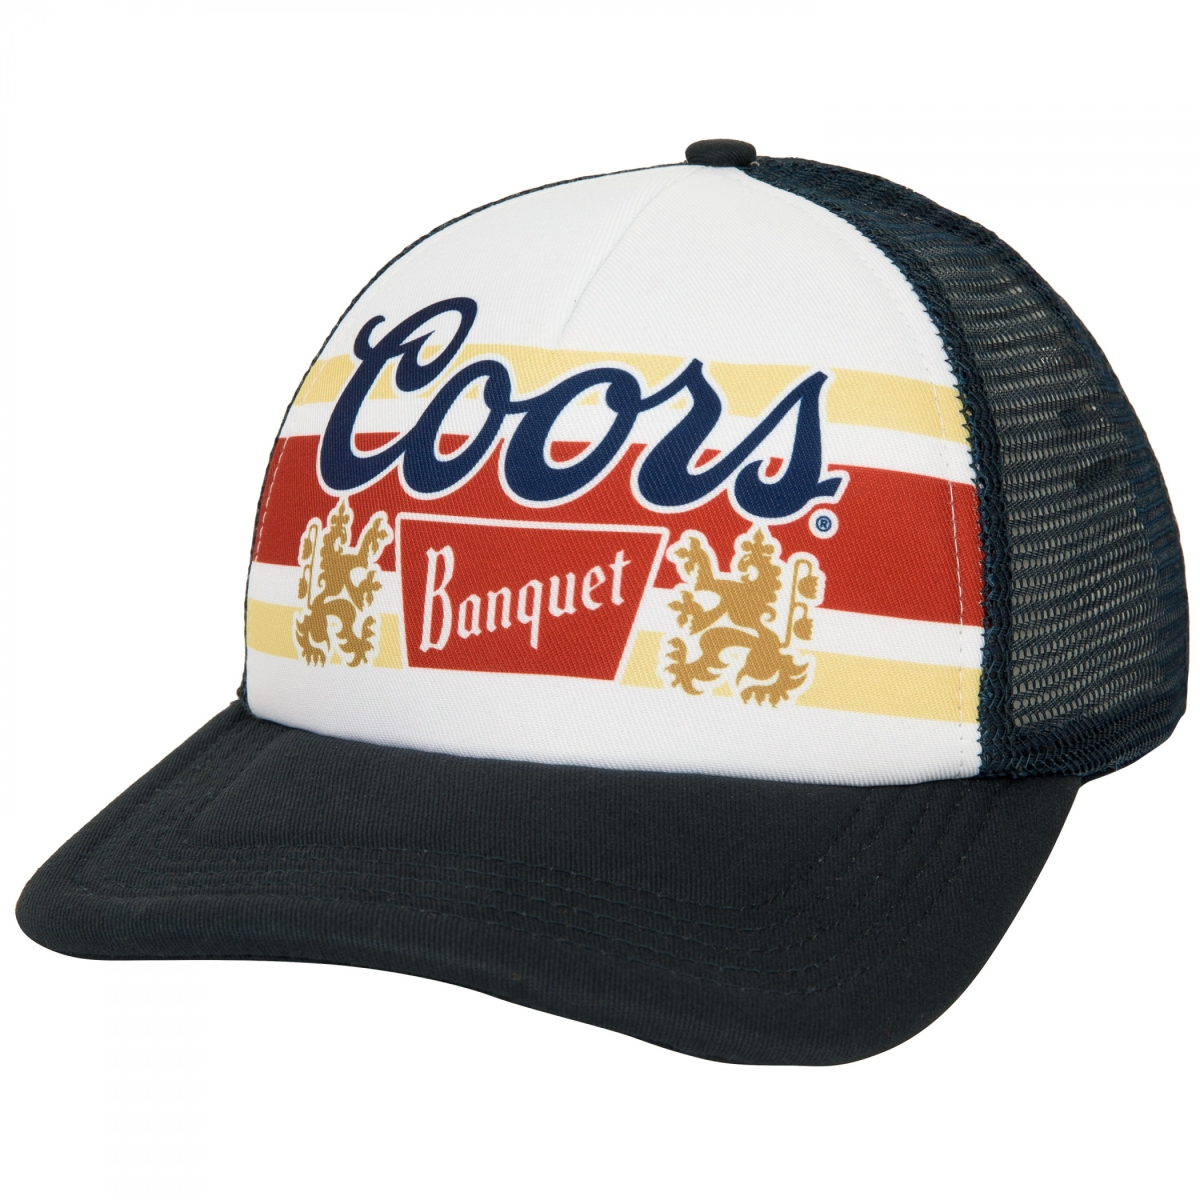 Picture of Coors 845604 Banquet Vintage Logo Mesh Back Trucker Hat, Black